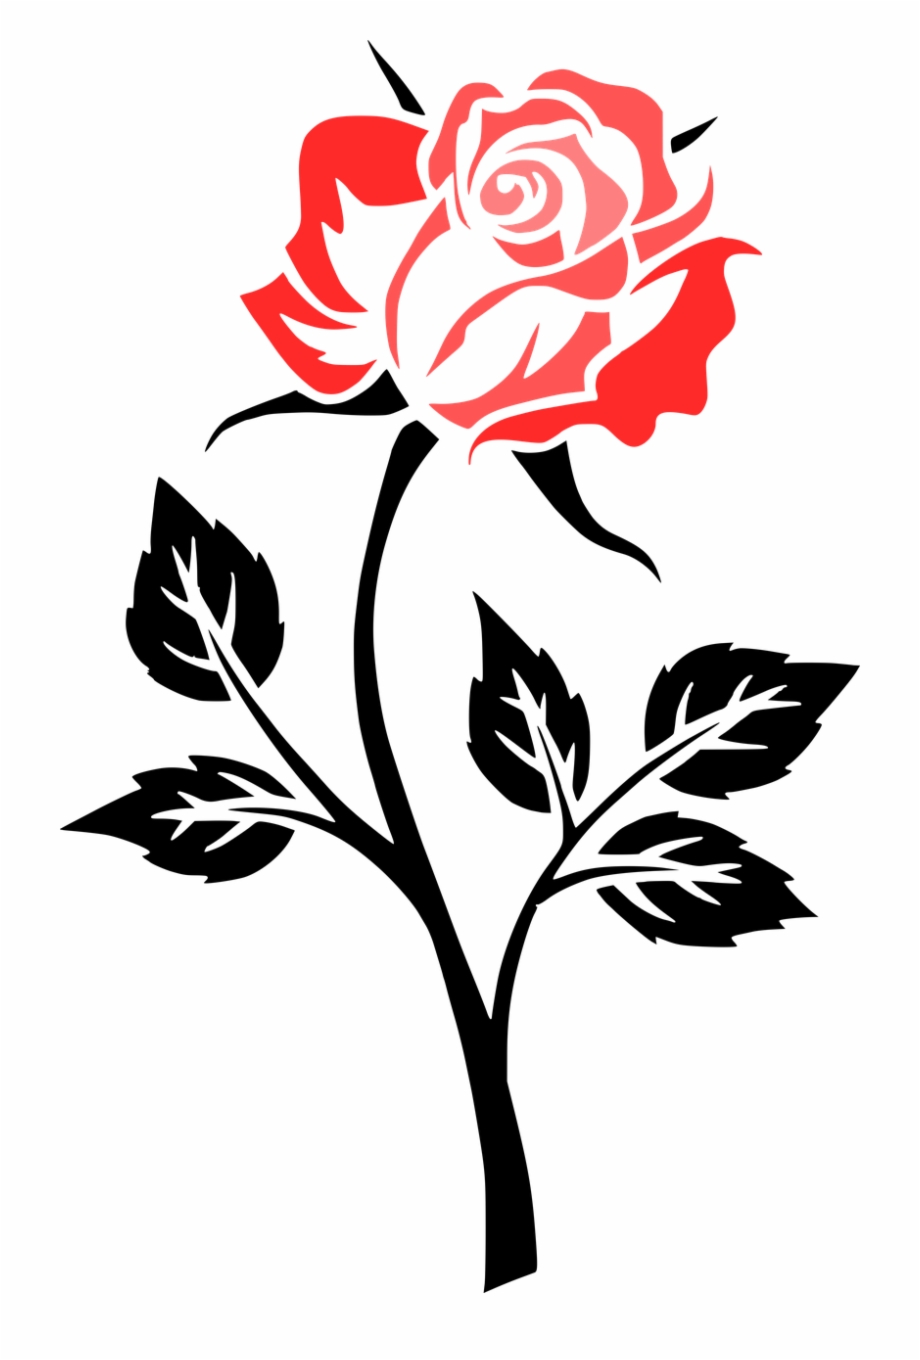 Flower Rose Contour Outlines Png Image.